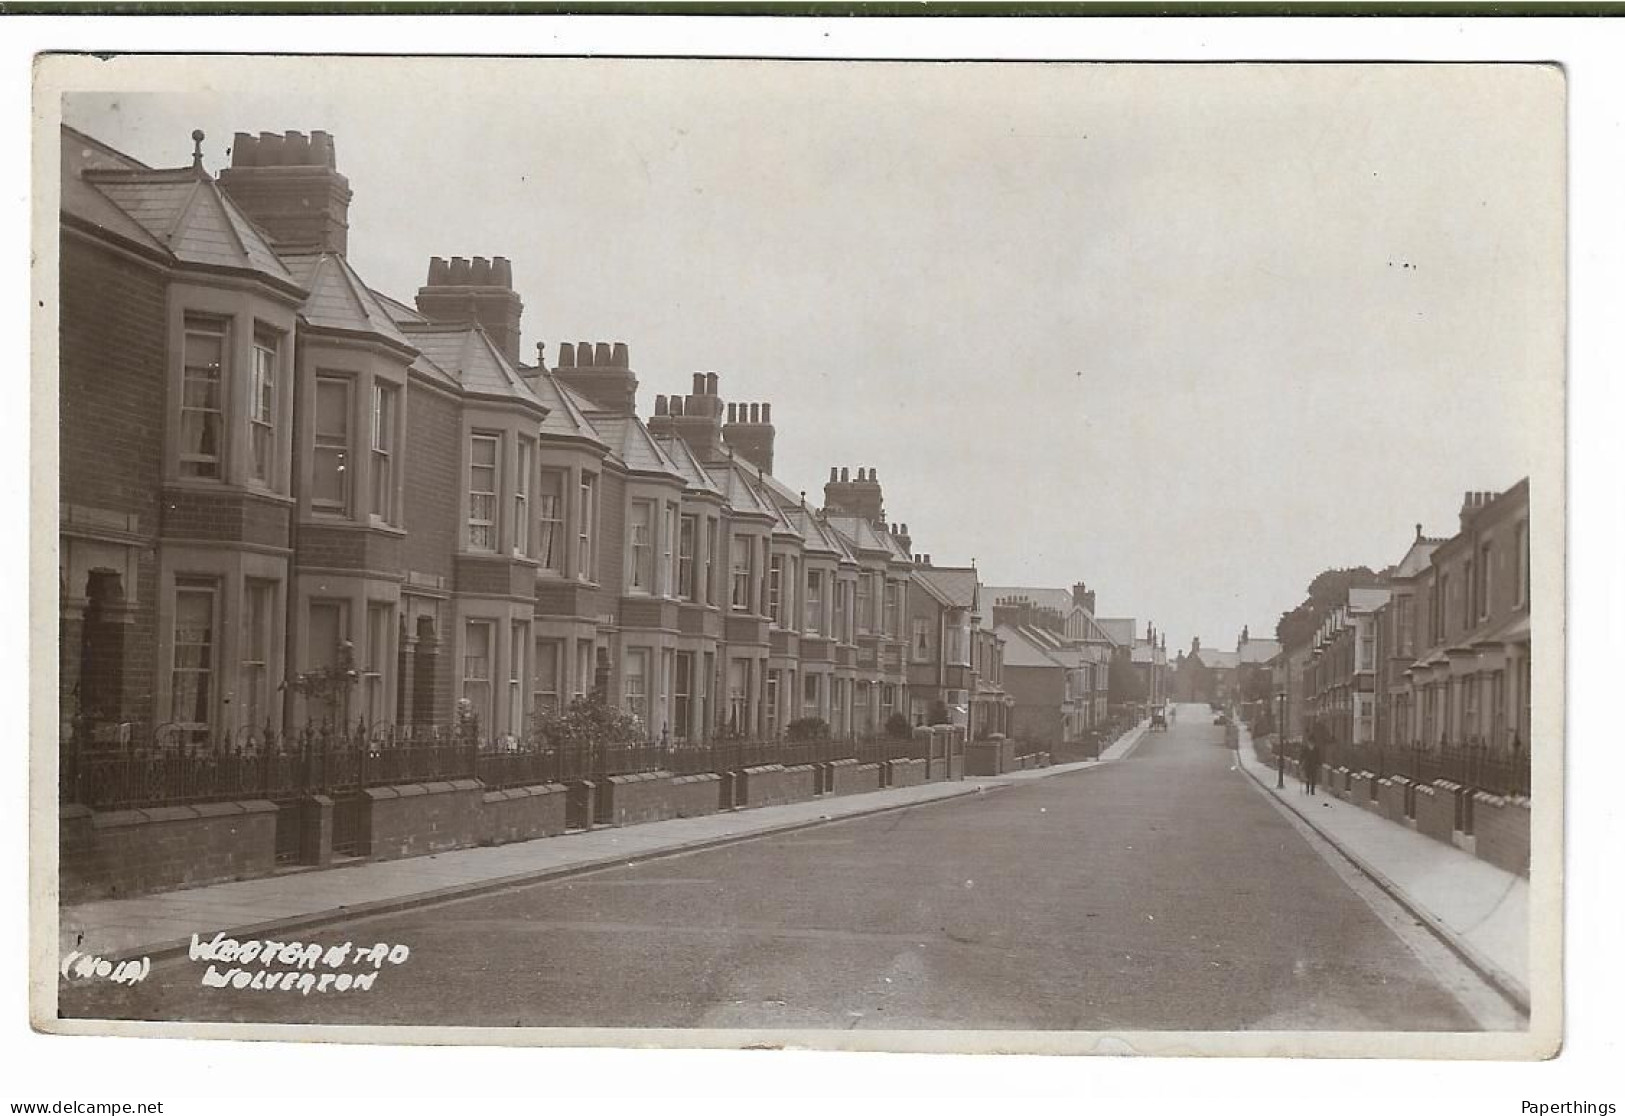 Real Photo Postcard, Buckinghamshire, Wolverton, Road, Street, Footpath, House, 1925. - Buckinghamshire